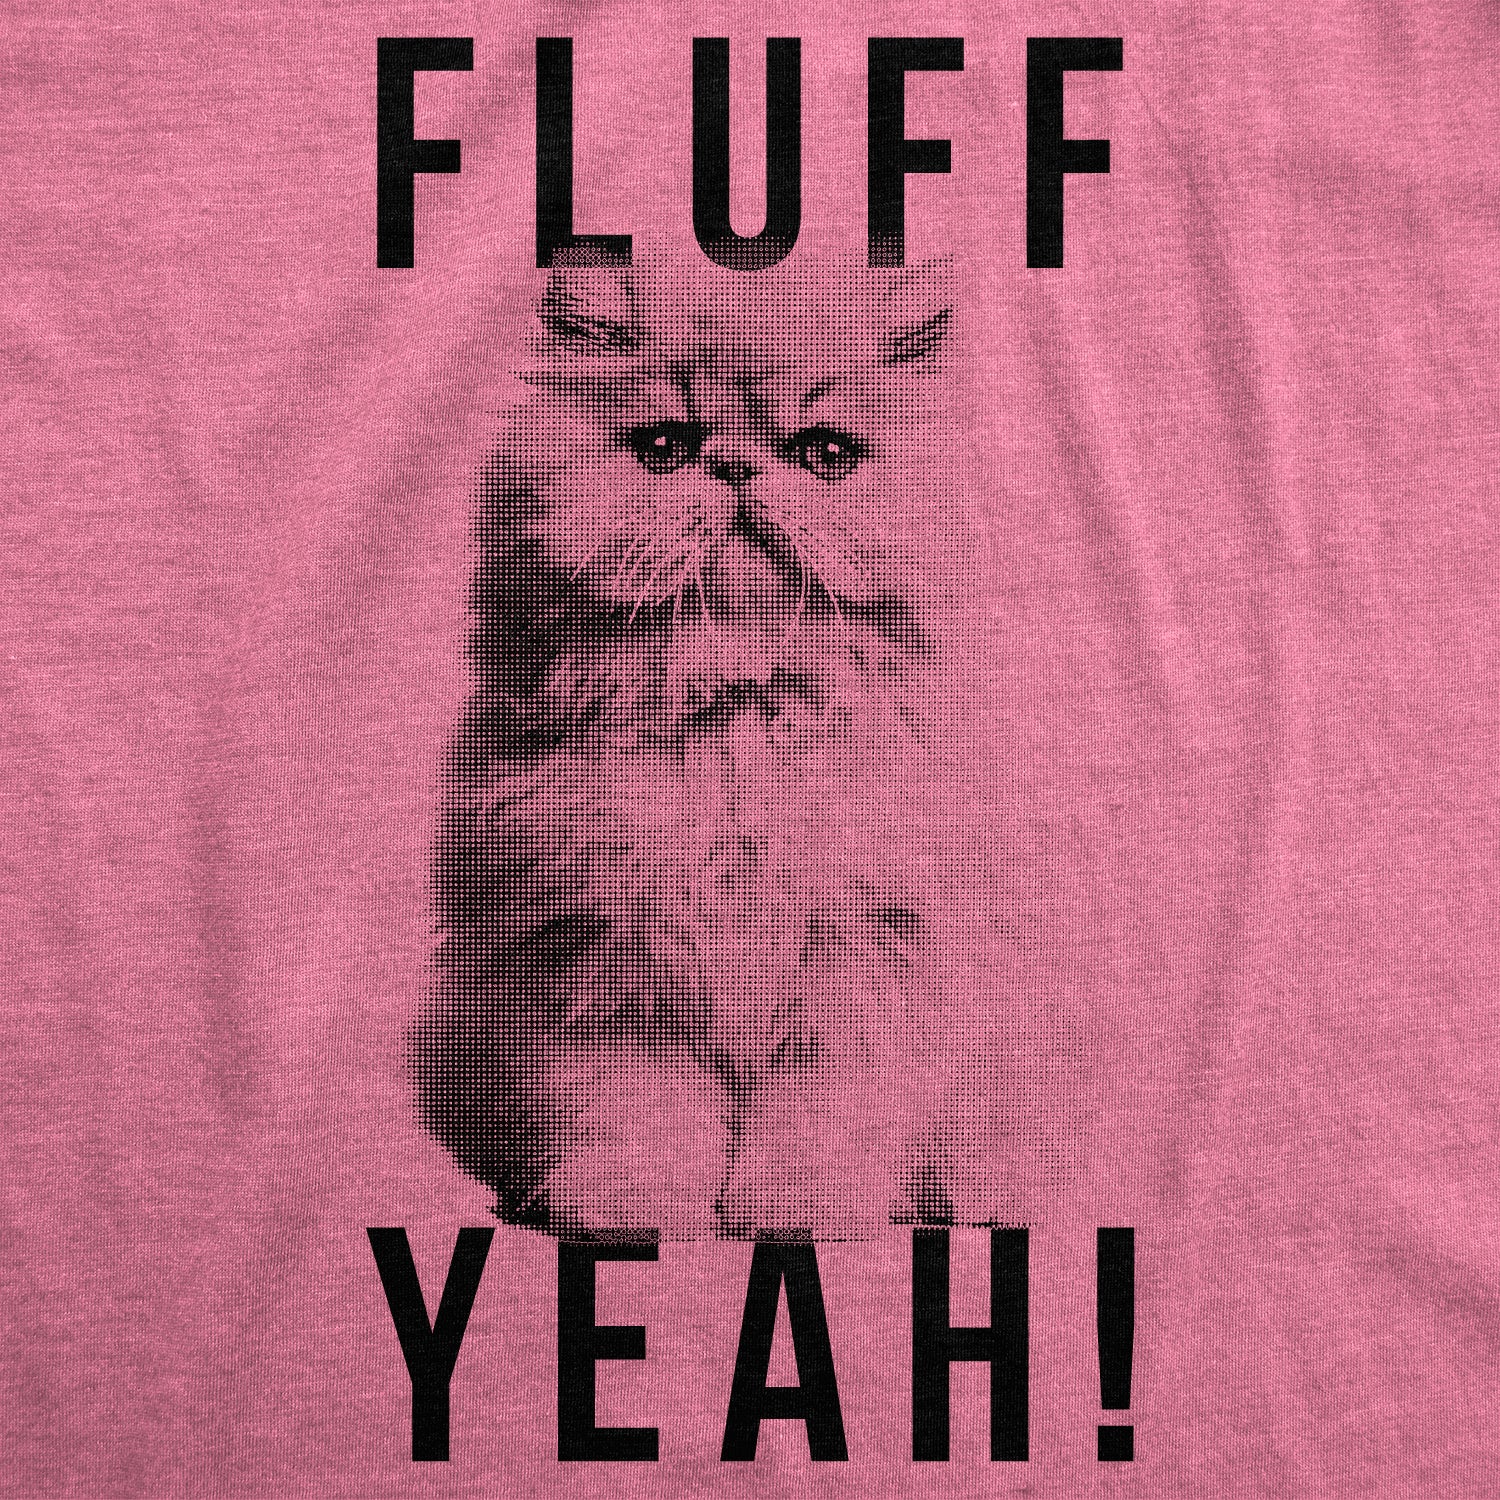 Funny Heather Pink Fluff Yeah Womens T Shirt Nerdy Animal Cat Tee